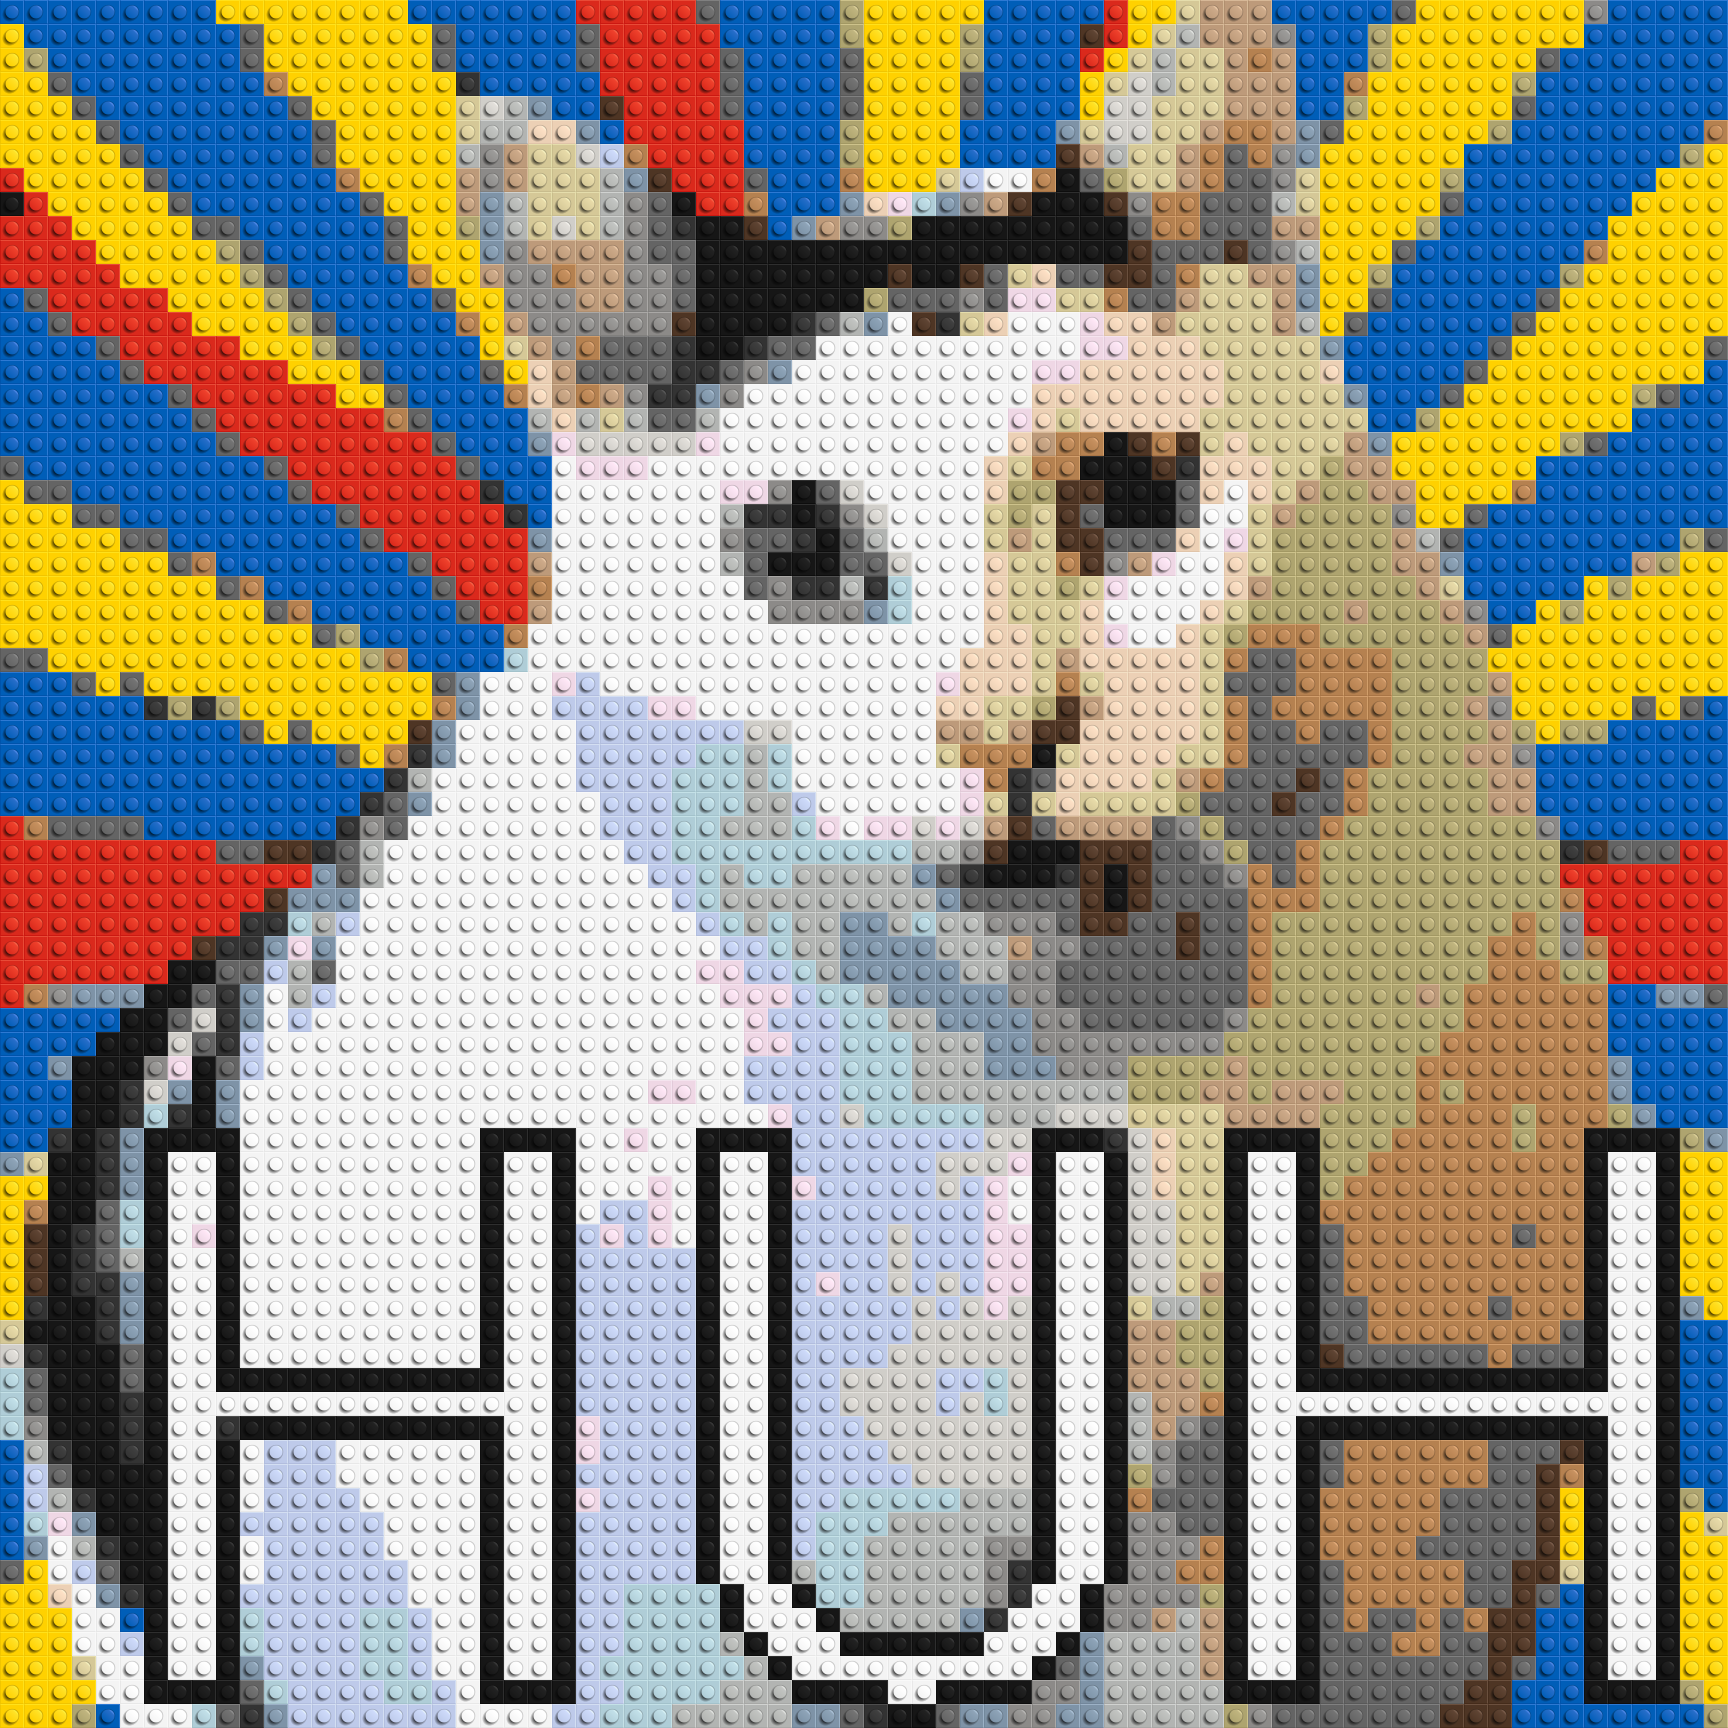 Huh Cat Meme - Brick Art Mosaic Kit 3x3 large